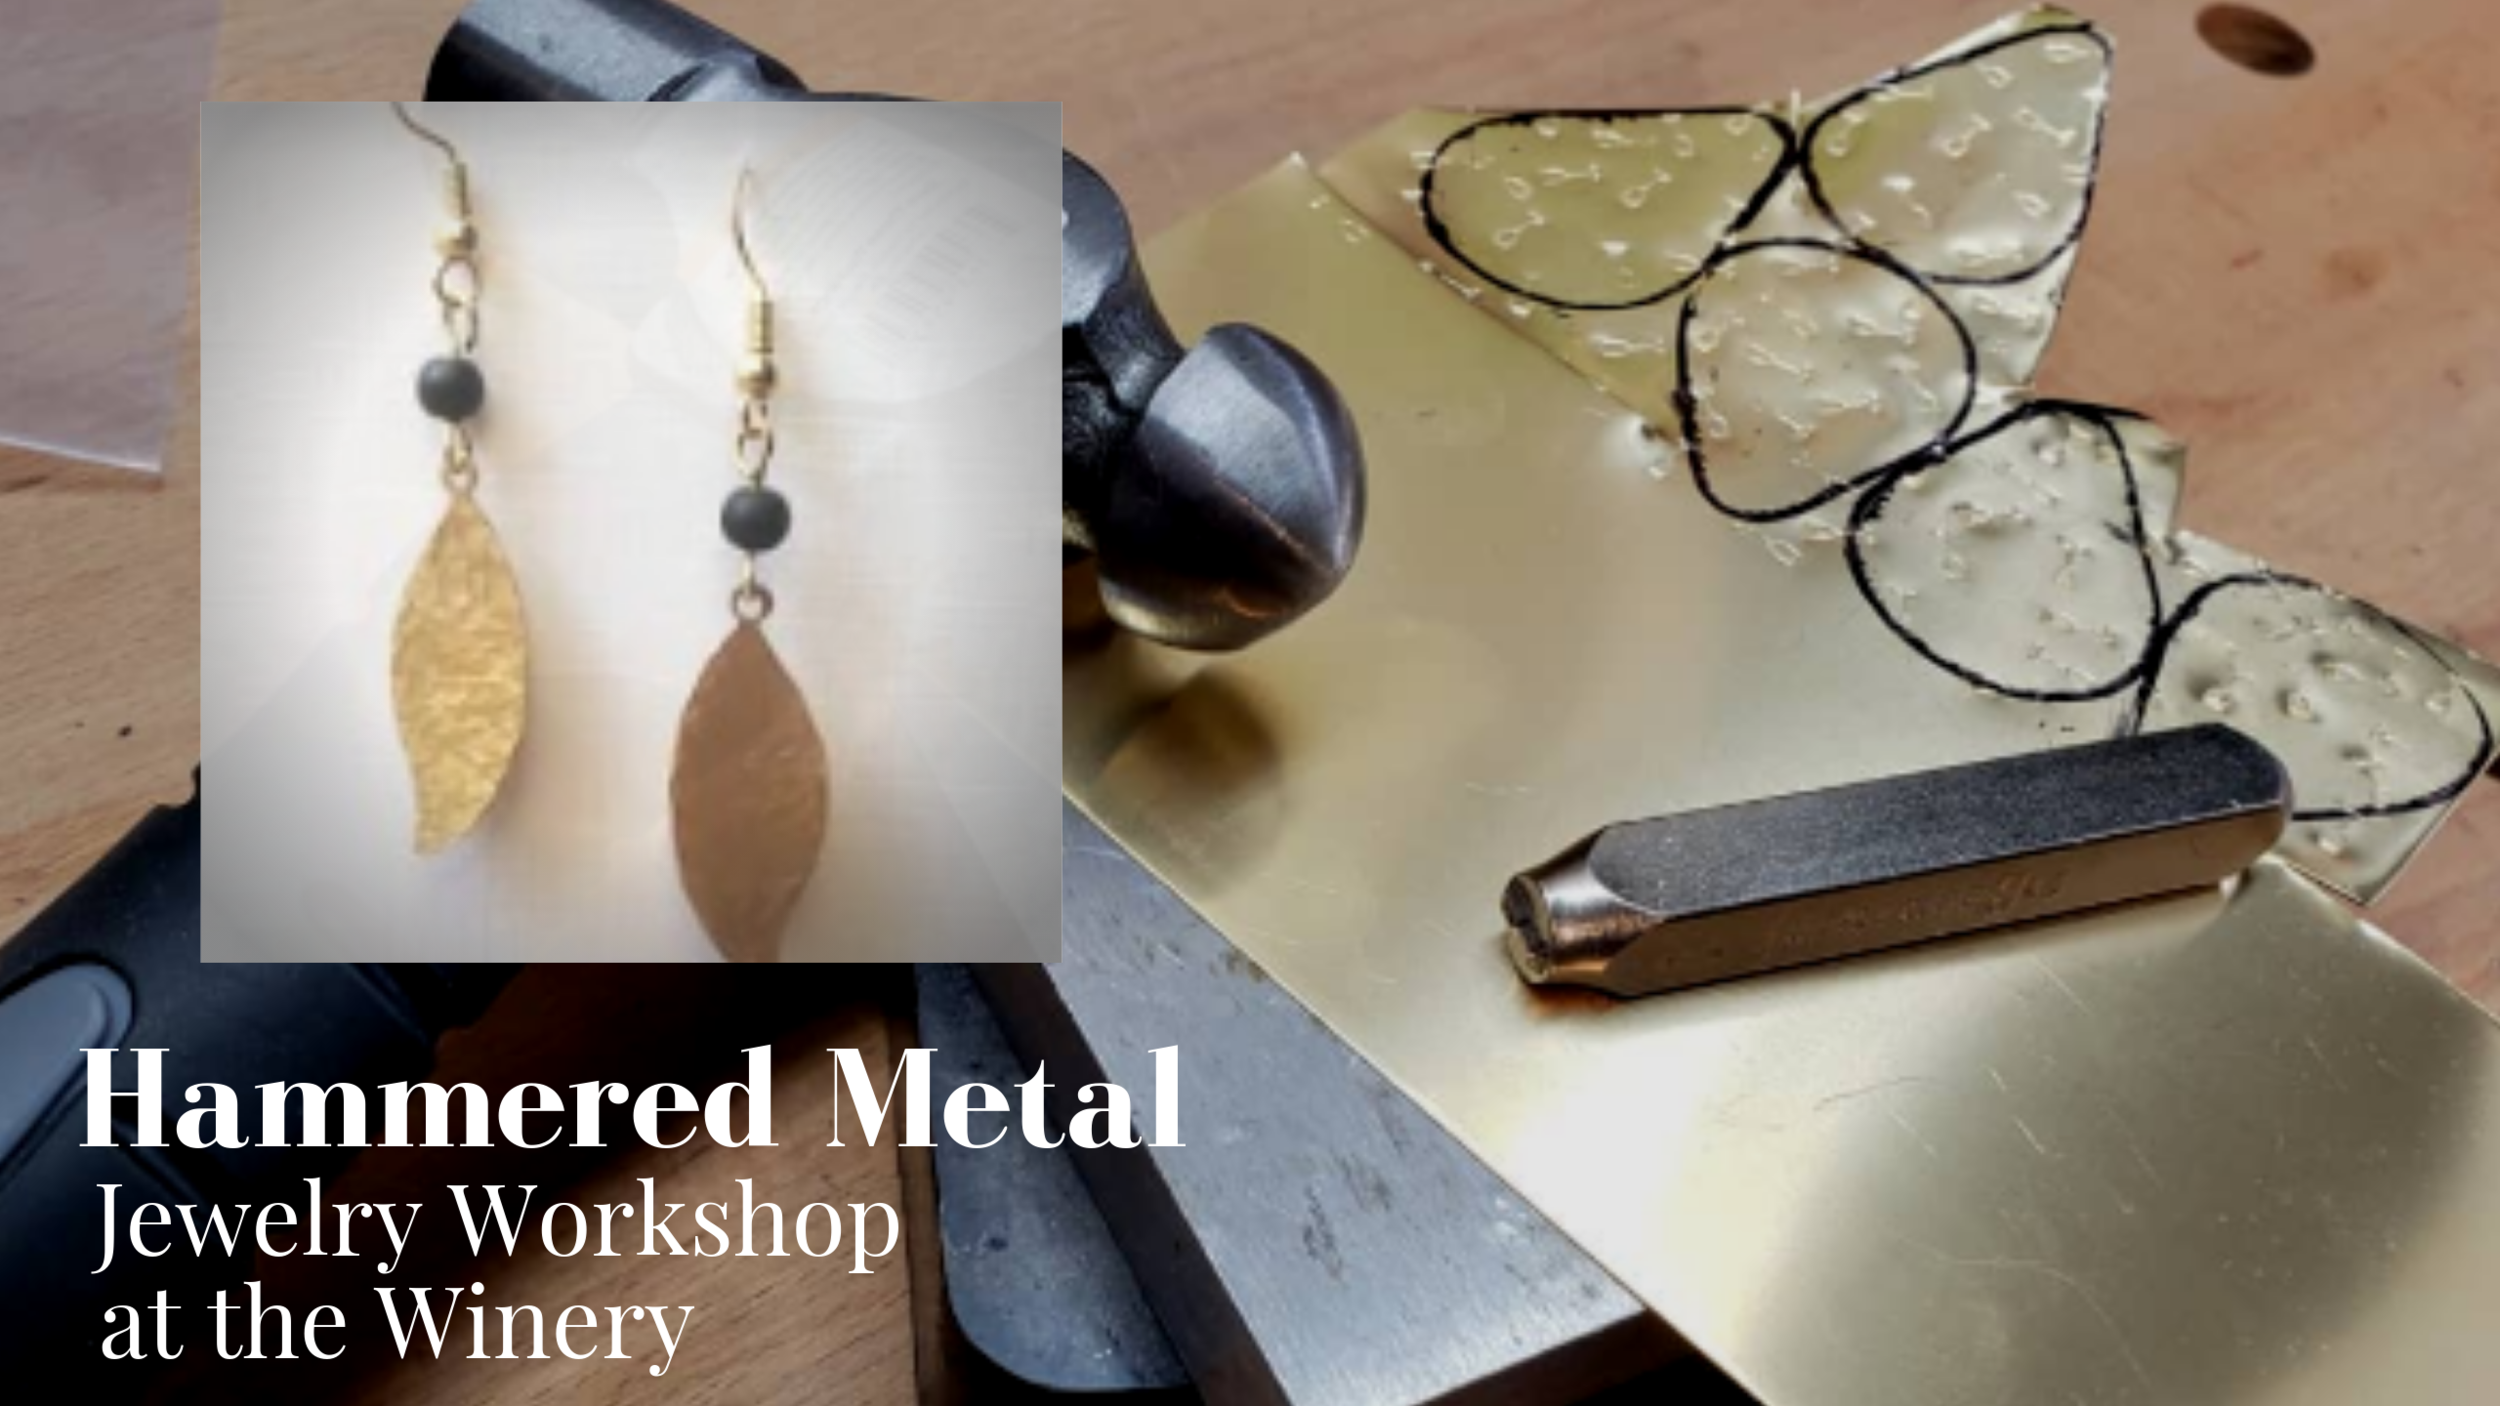 Sweetheart Ring Making Workshop - The Steel Yard